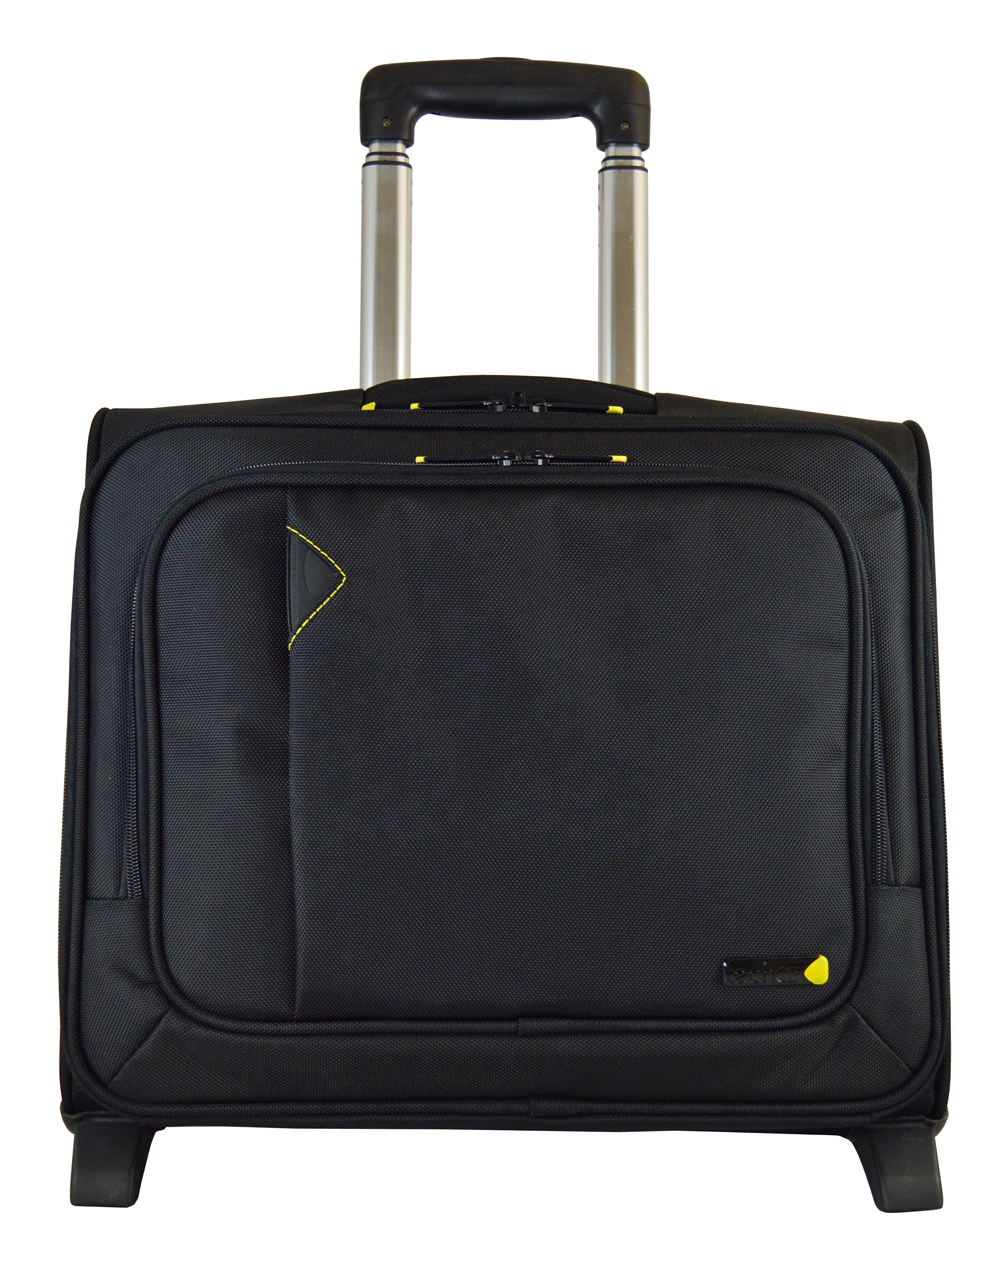 Techair Classic pro 14 - 15.6" trolley briefcase Black